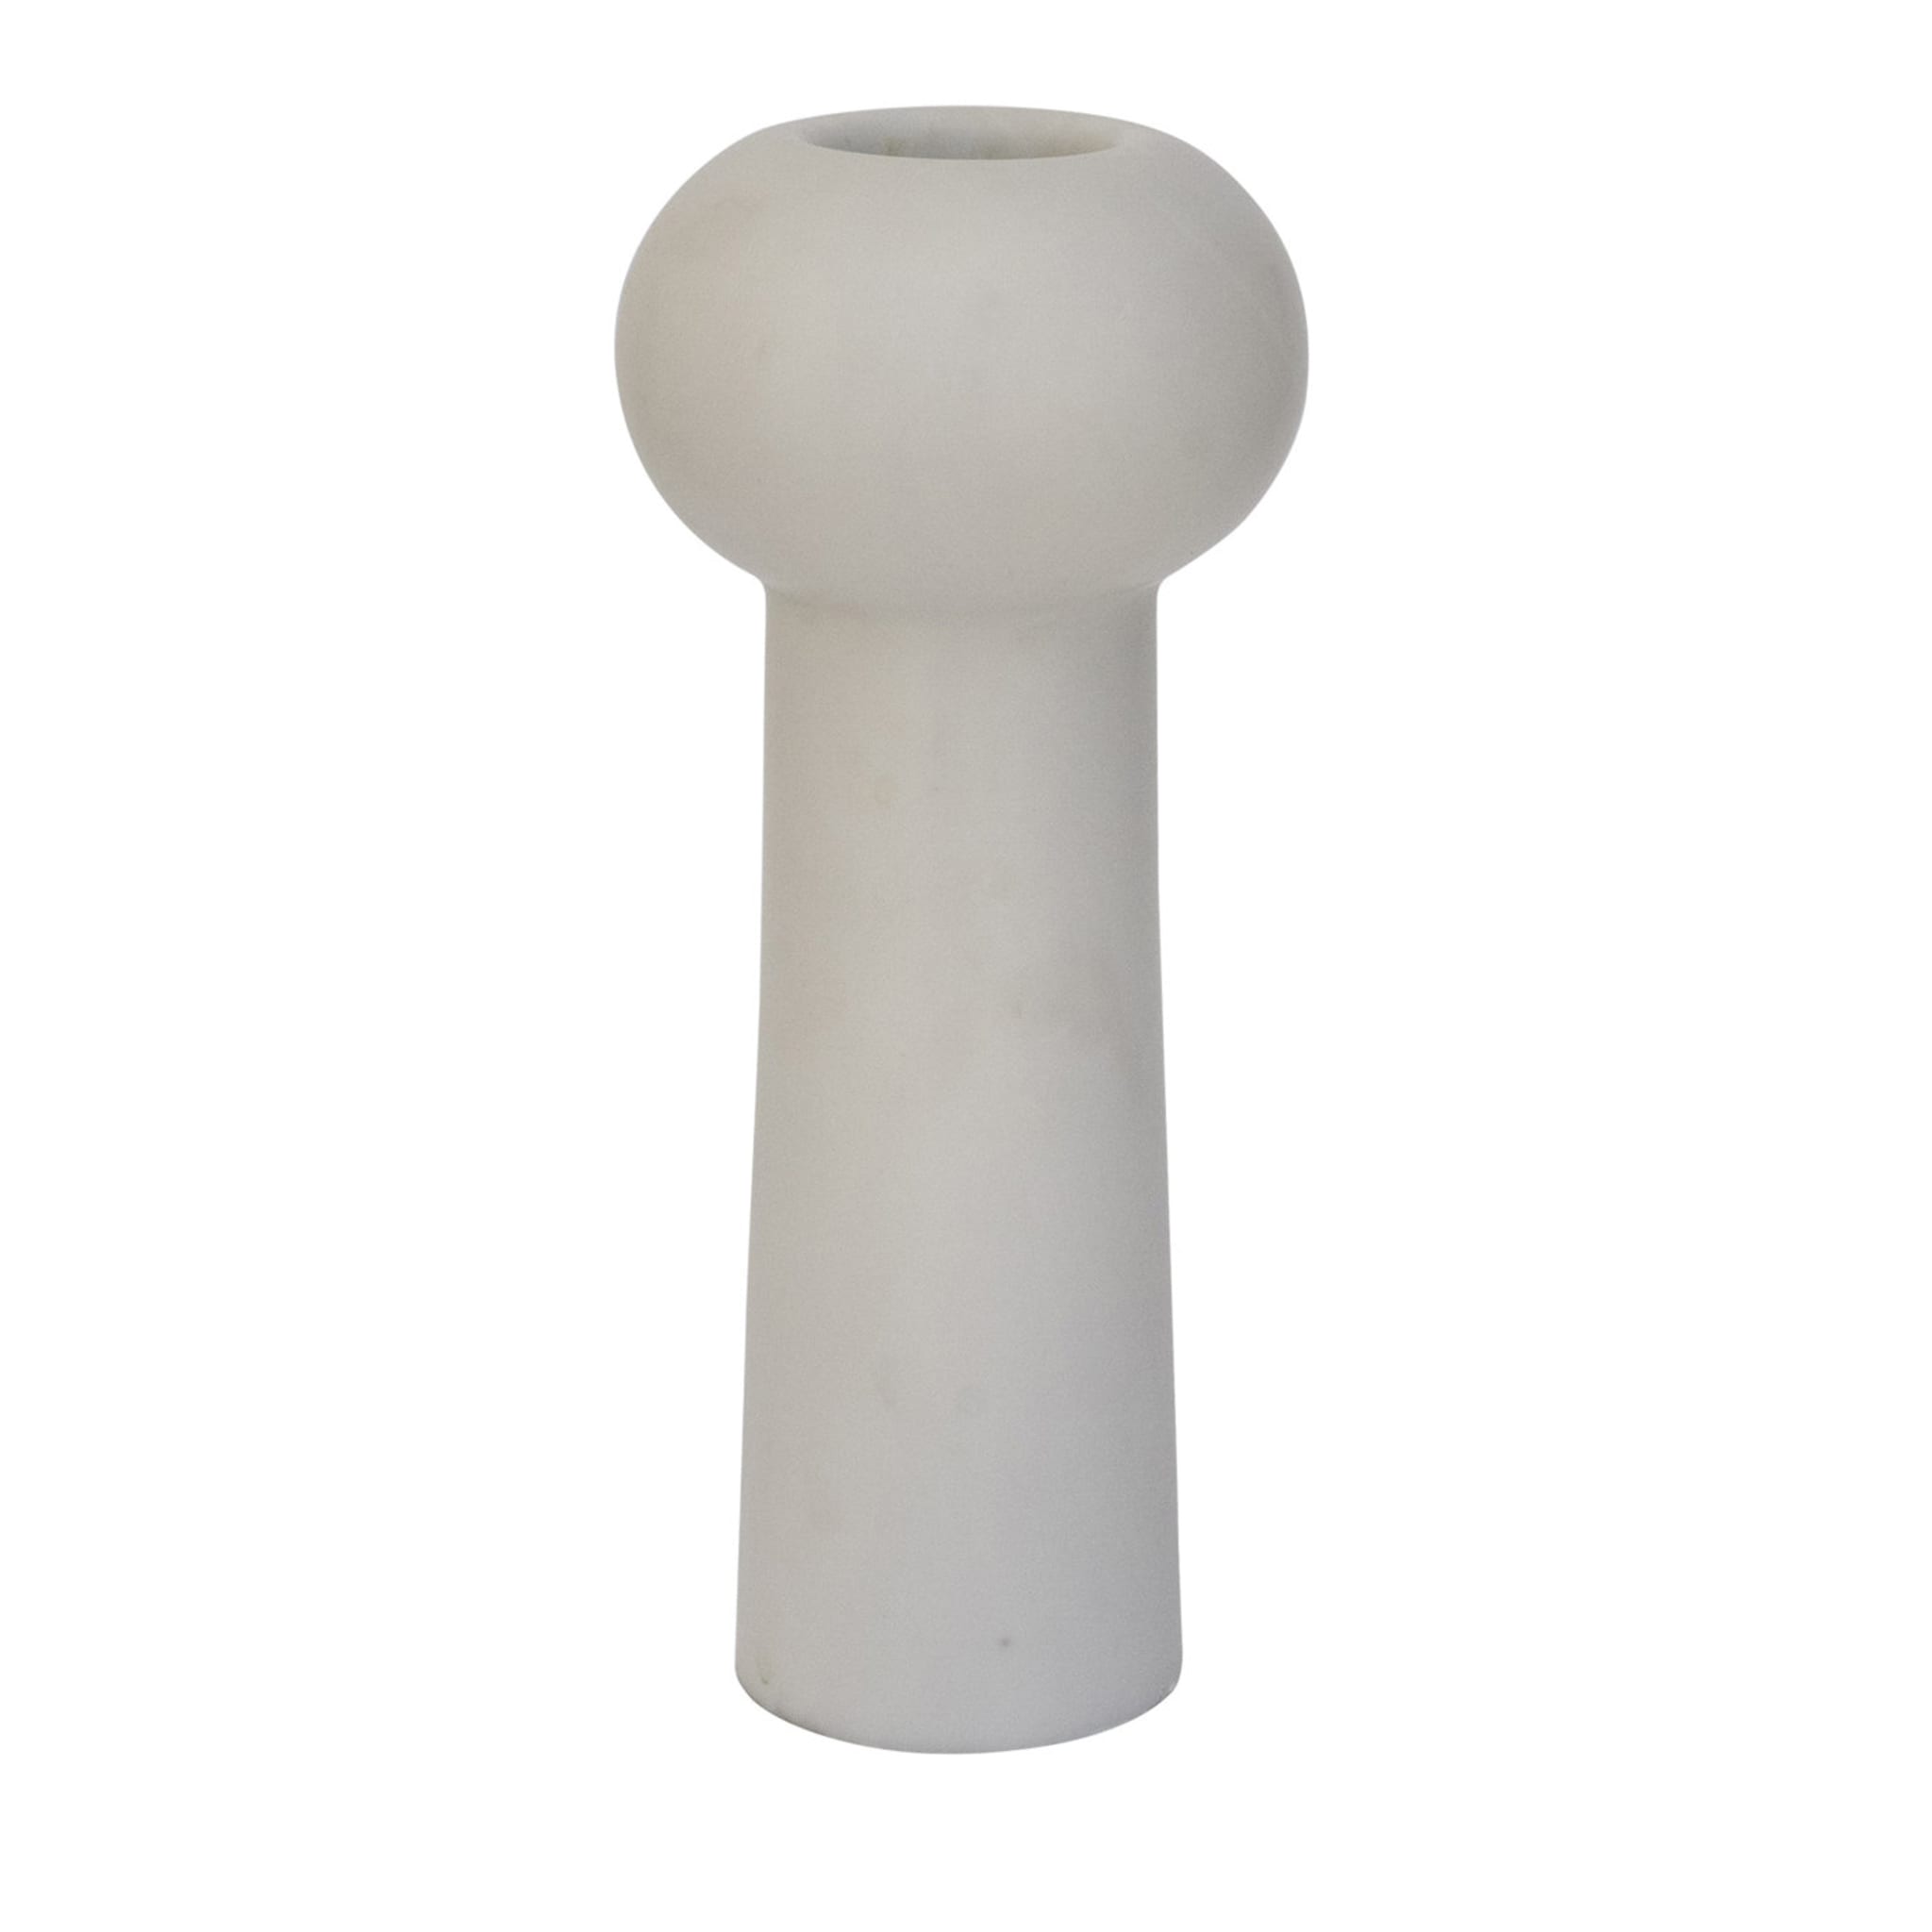 Cilindro Minimal Vase aus weißem Carrara-Marmor - Hauptansicht